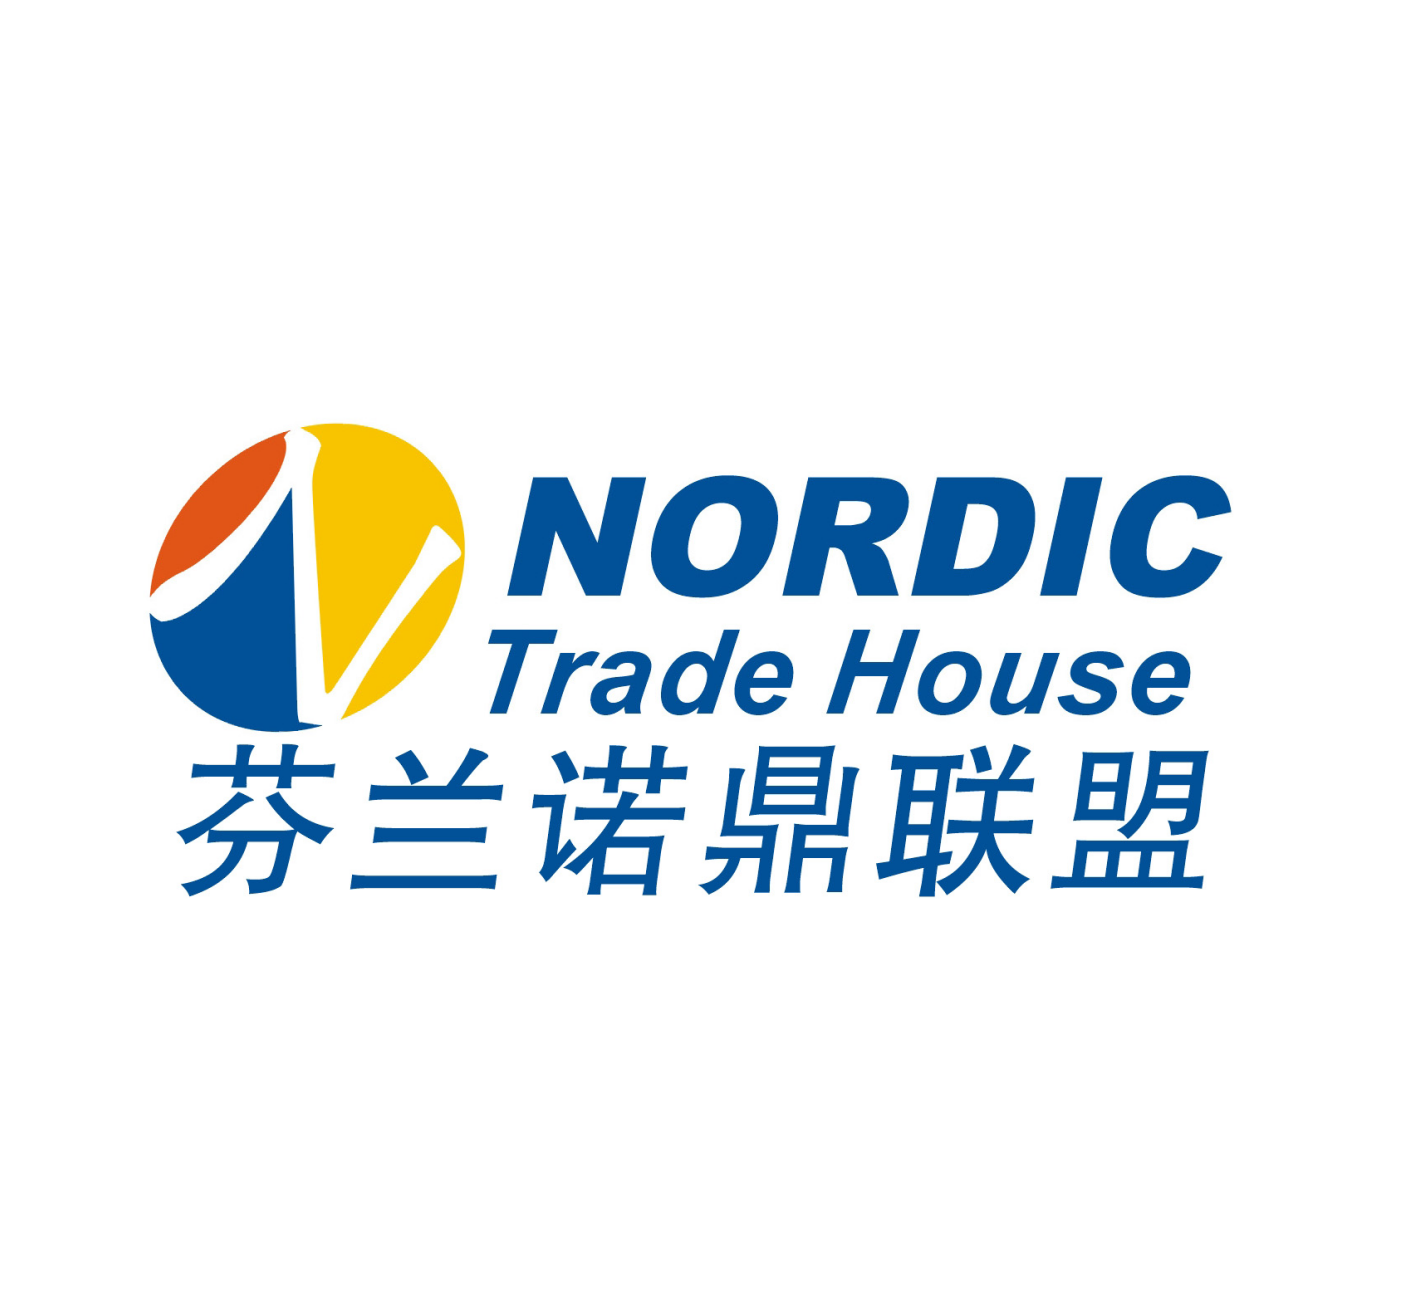 Nordic Trade House Finland